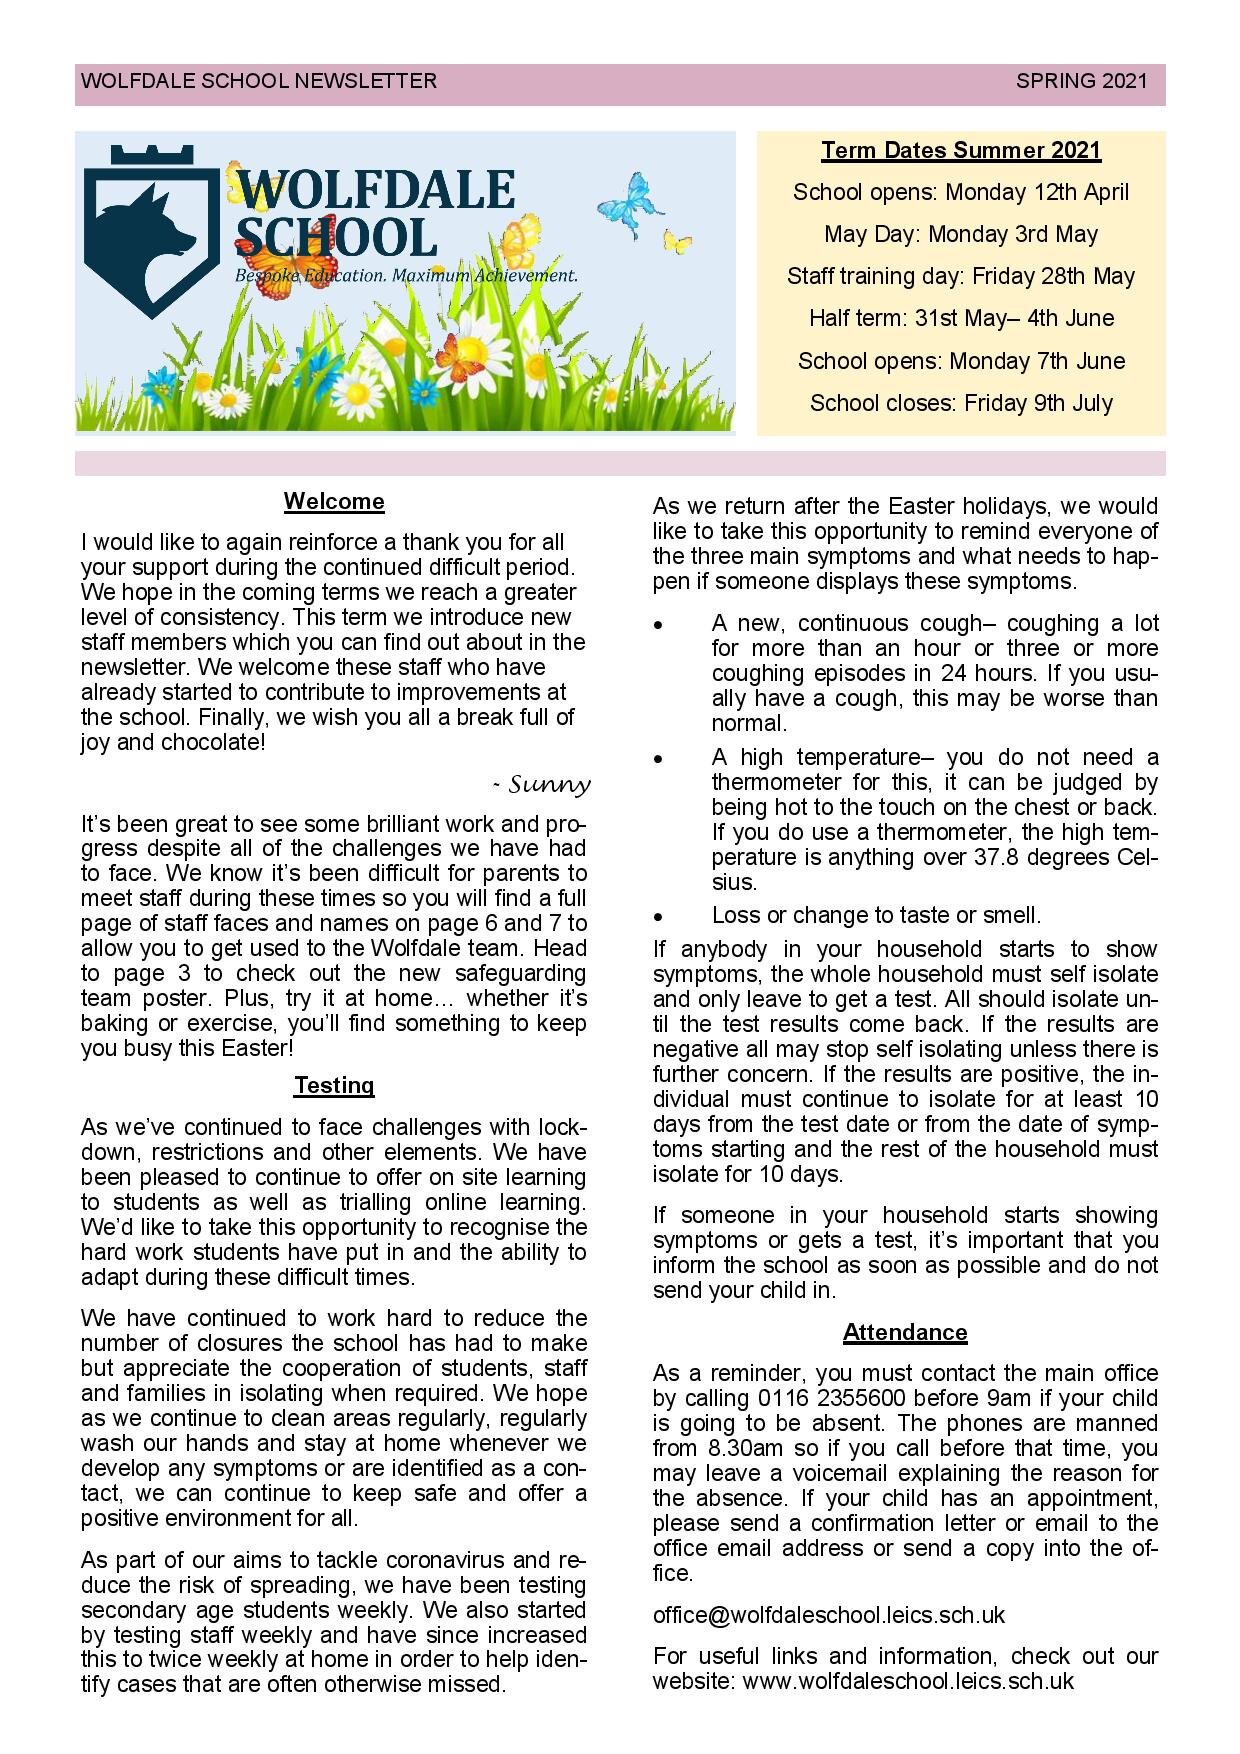 Spring 2021 Newsletter Updated-page-001.jpg